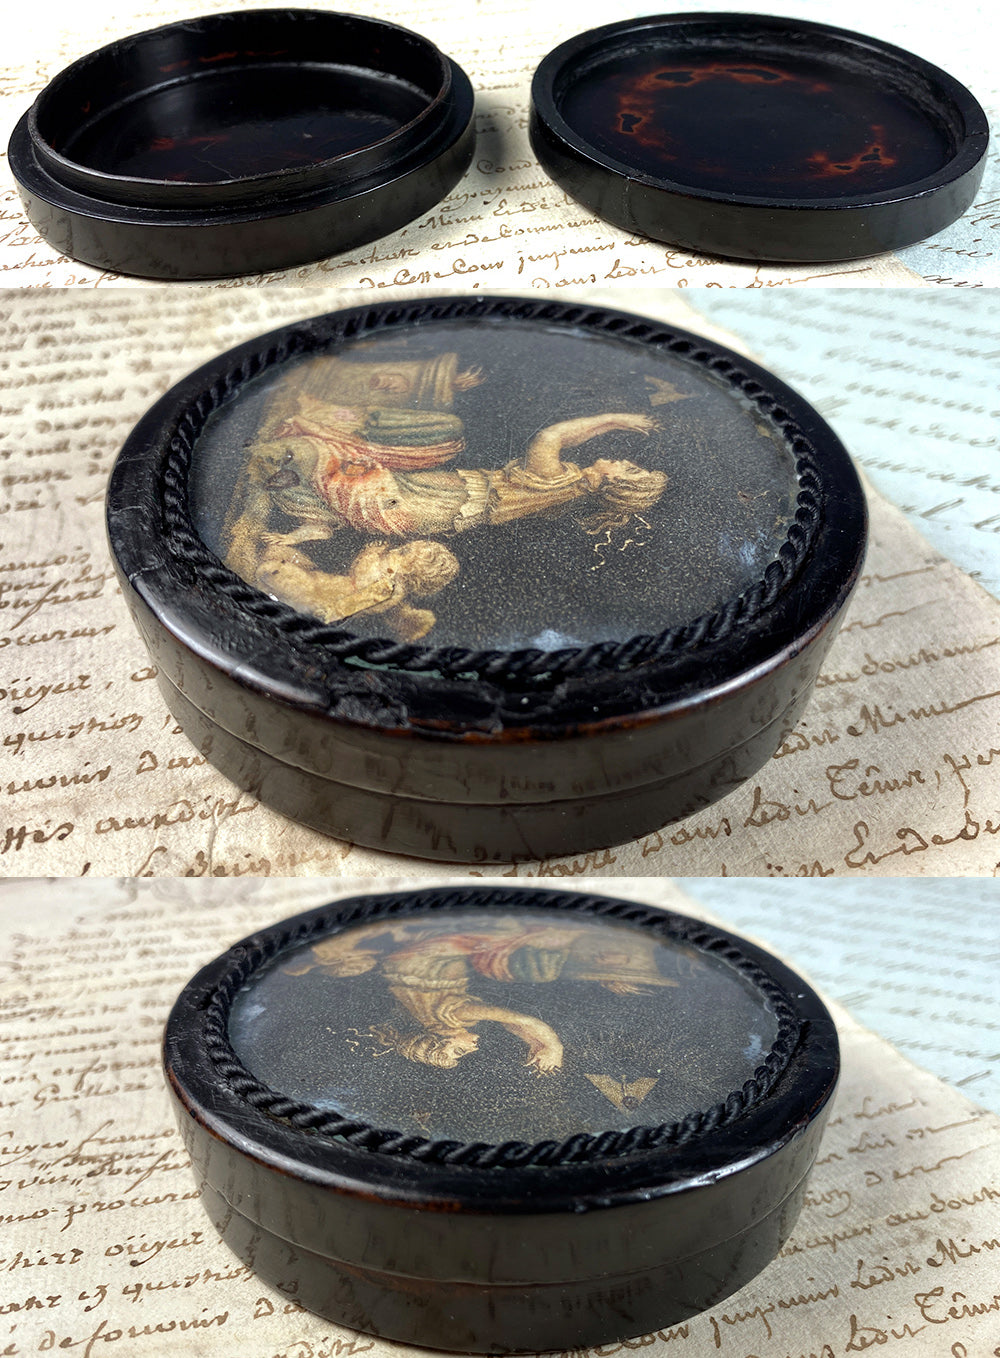 Antique 18th Century Portrait Miniature Snuff Box, Cupid and Maiden, Masonic Iconography